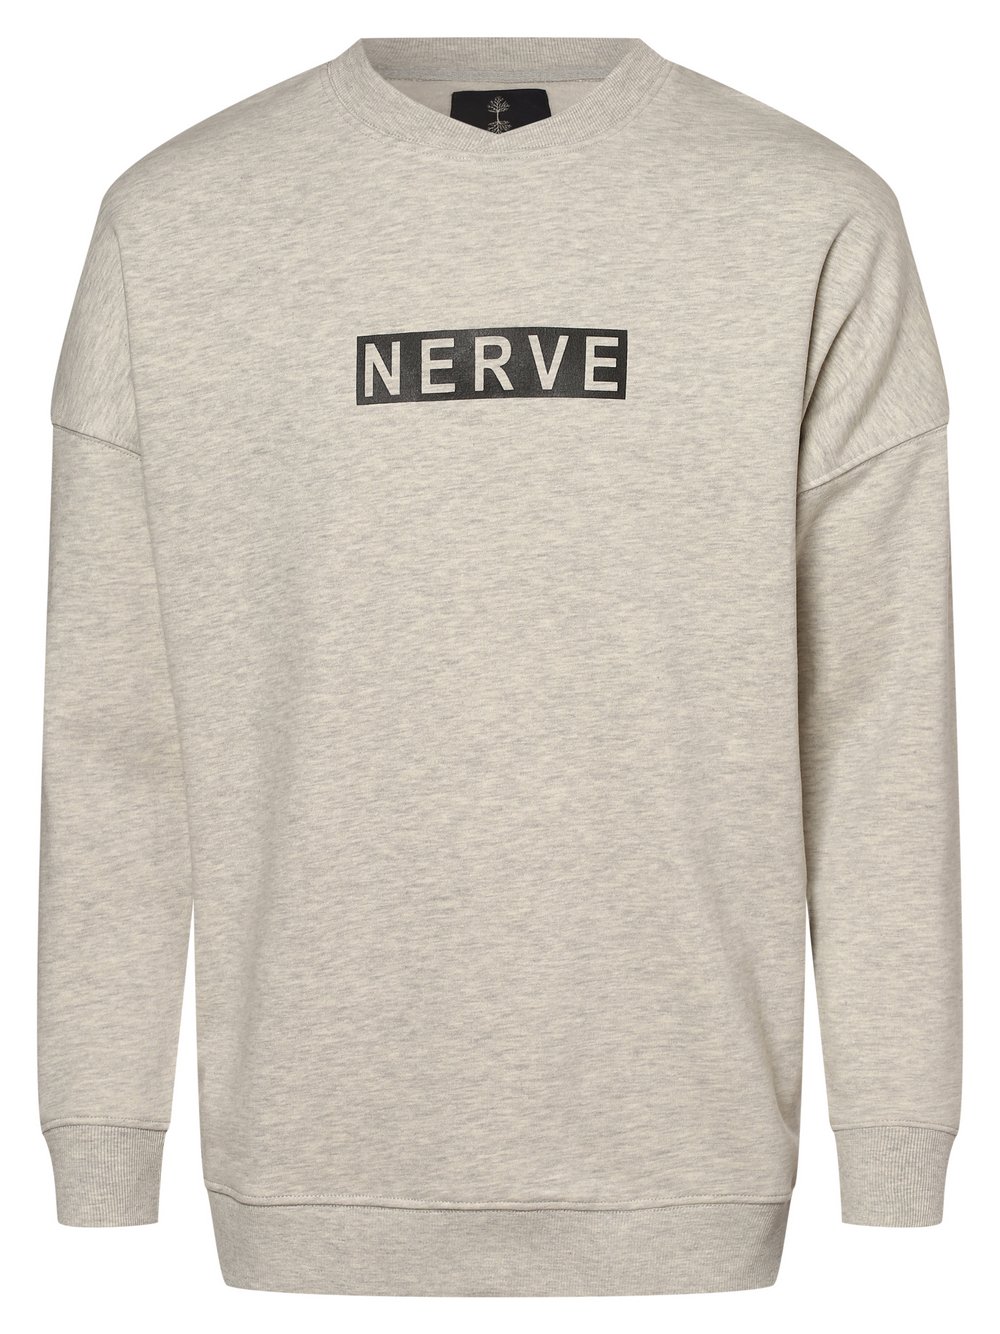 Nerve - Męska bluza nierozpinana – NENayeem, szary